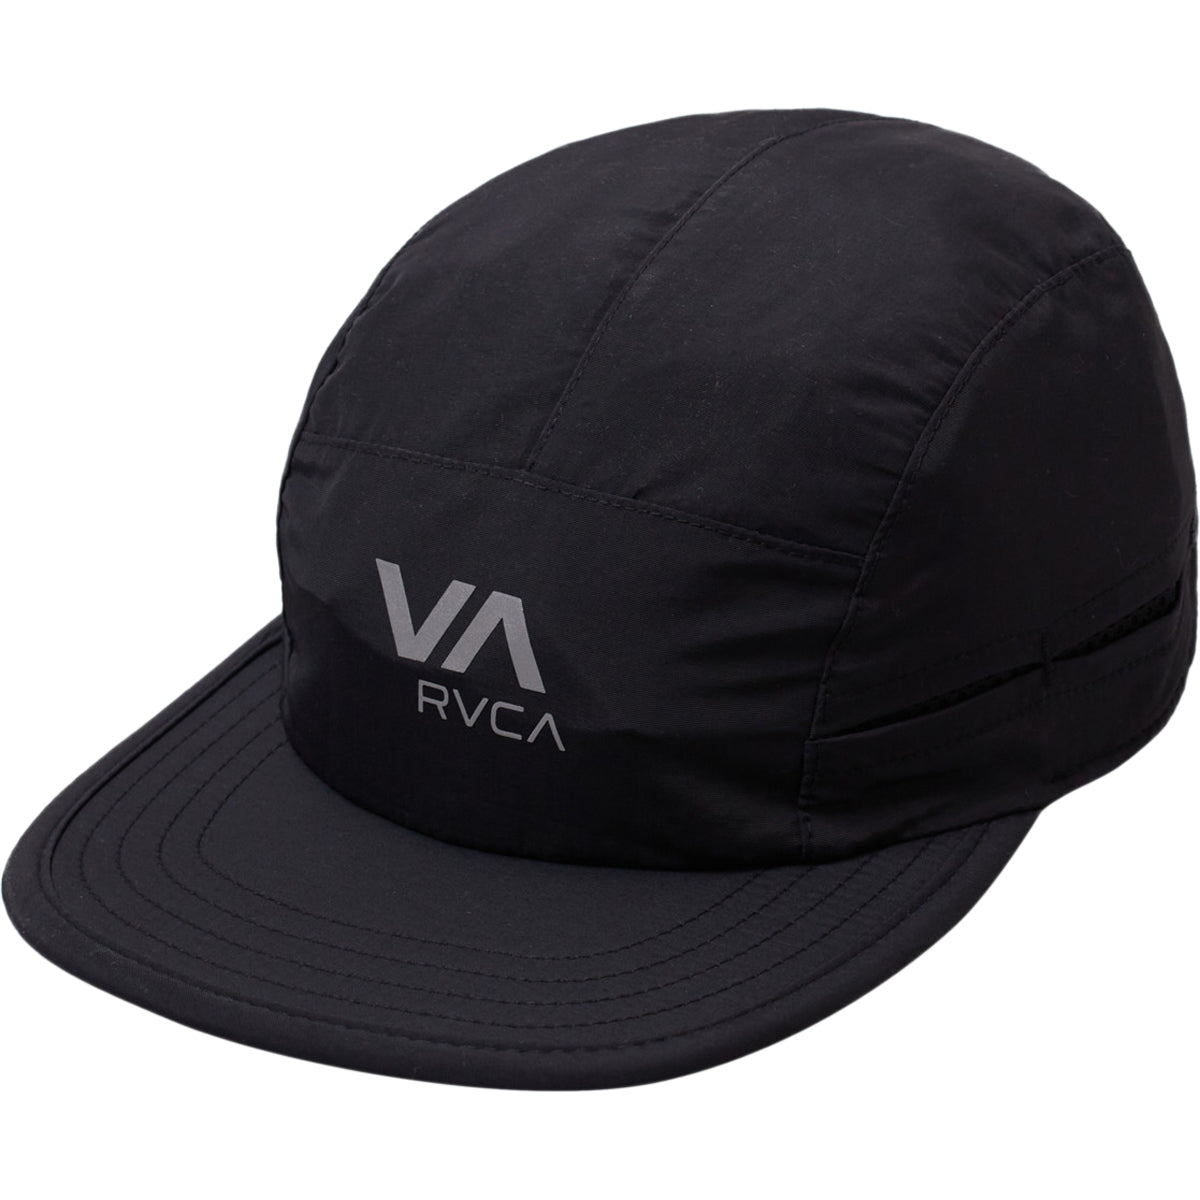 RVCA Outsider Hat - Black image 1